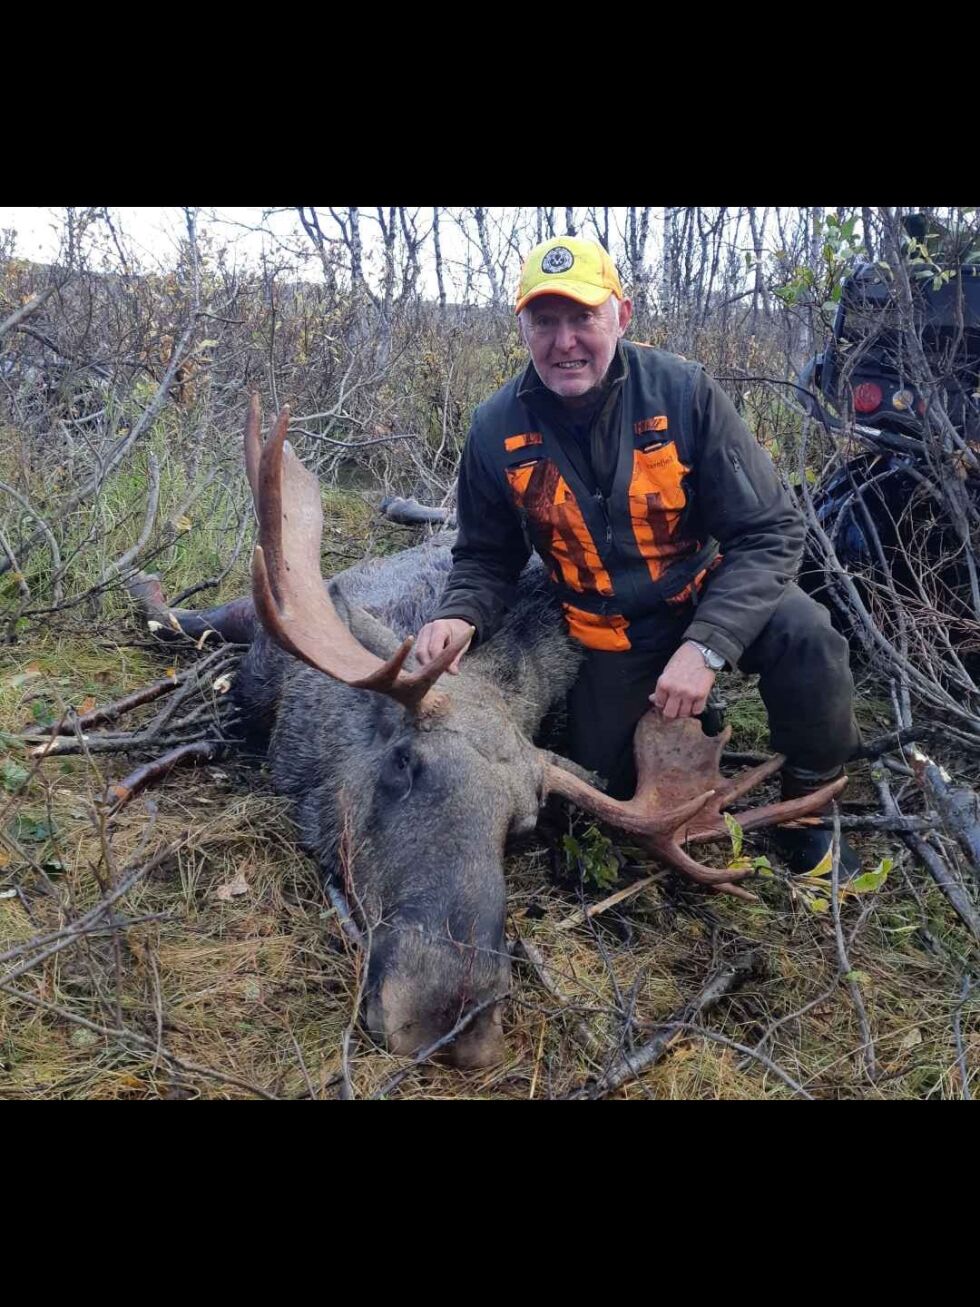 311 kilo veide denne oksen som Hans Lund felte i Vesterbukt elgvald i Tana. 
Foto: Marianne Prytz Lund